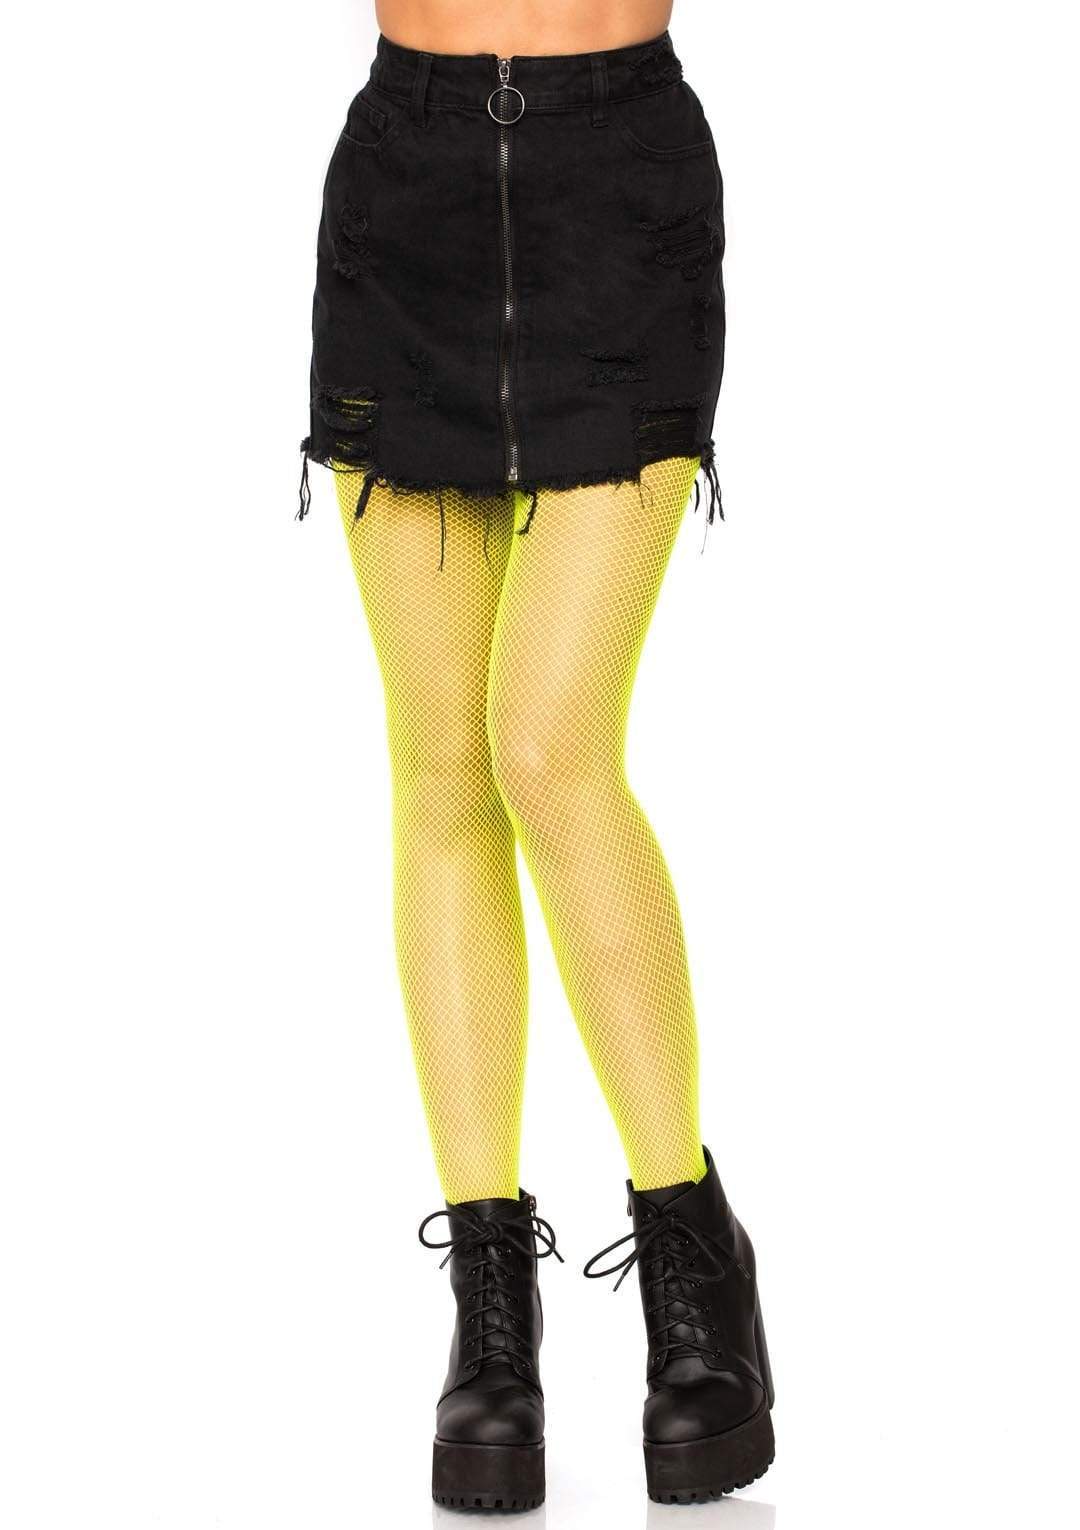 Nylon Fishnet Pantyhose Neon Yellow - Model Express VancouverHosiery